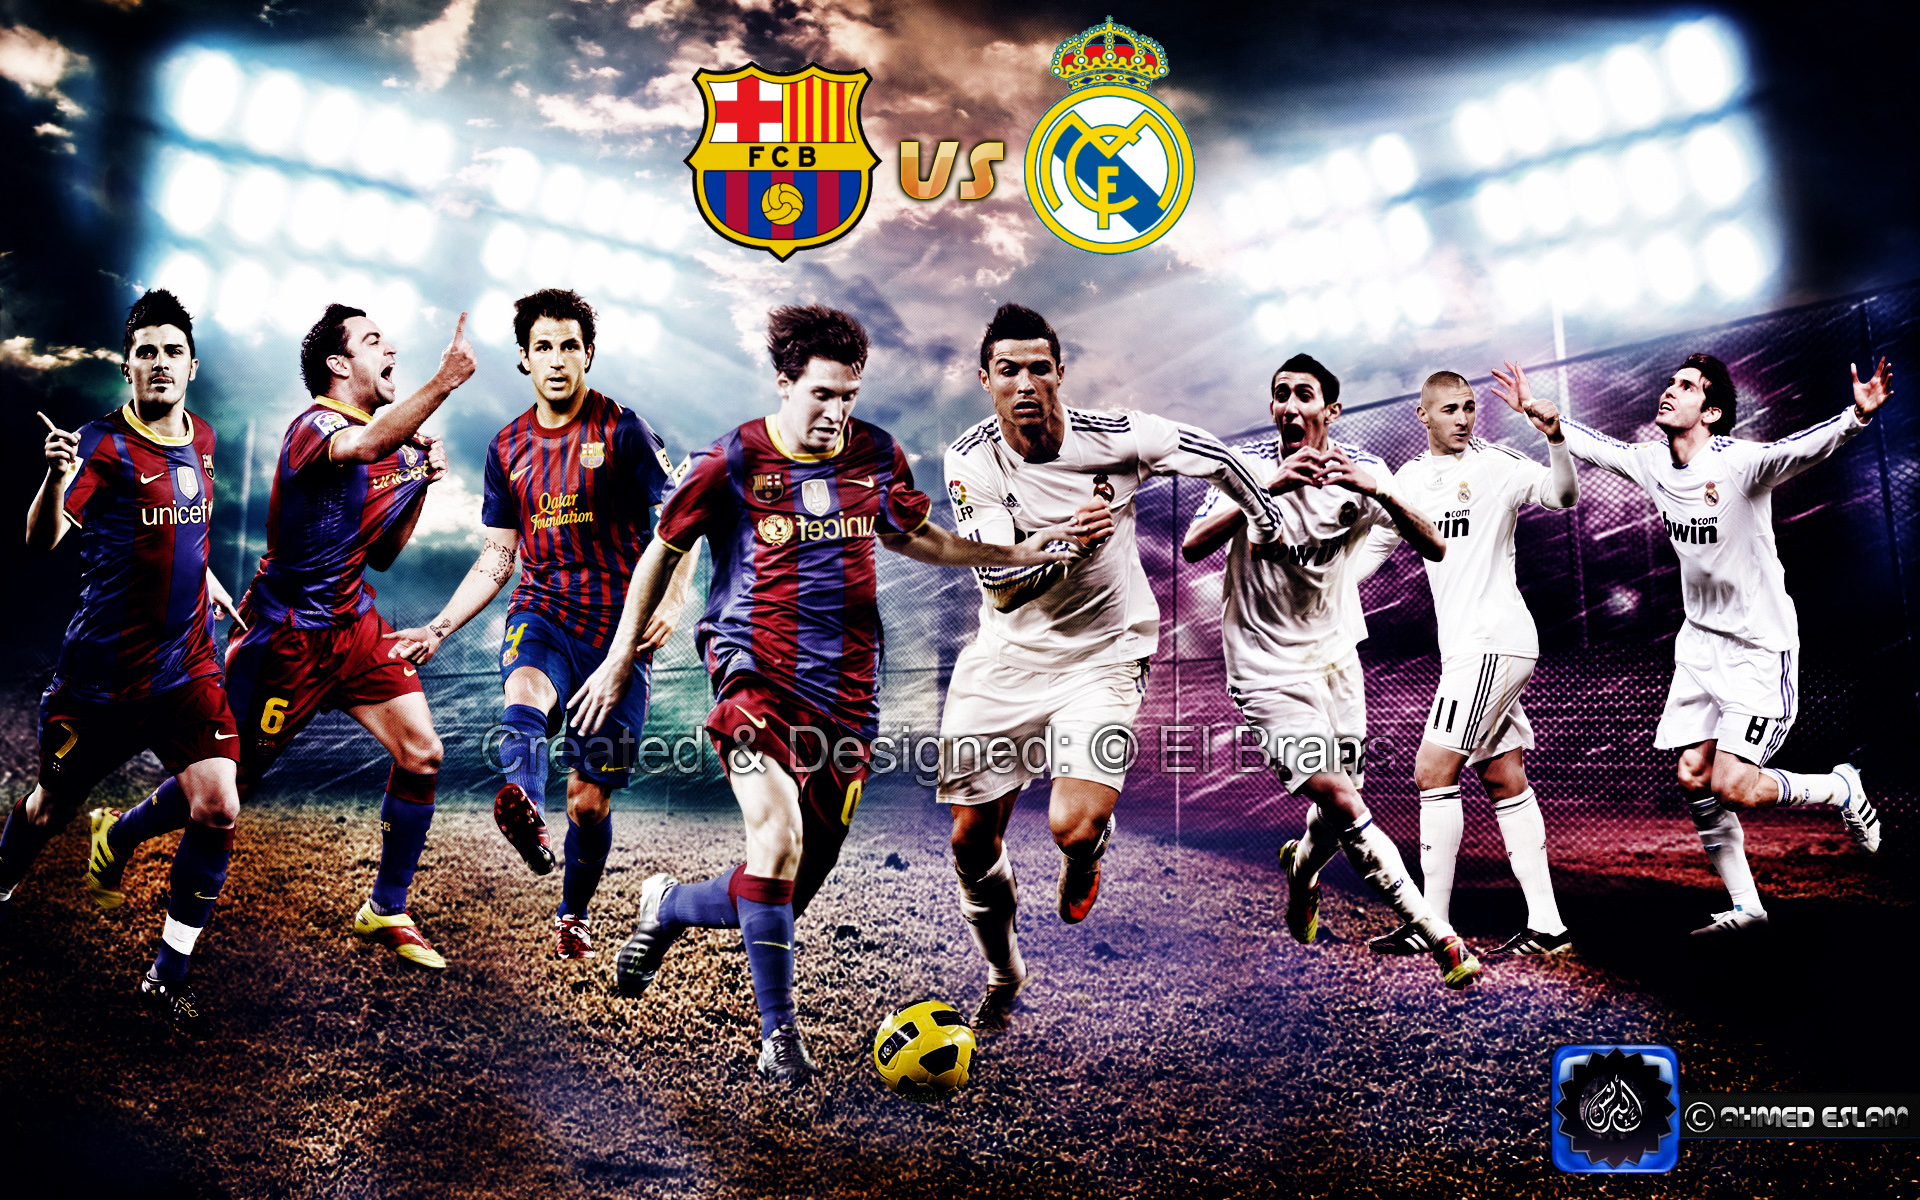 Bajnokok ligája: Barcelona-vs-Real Madrid-2013 (kép)1920 x 1200